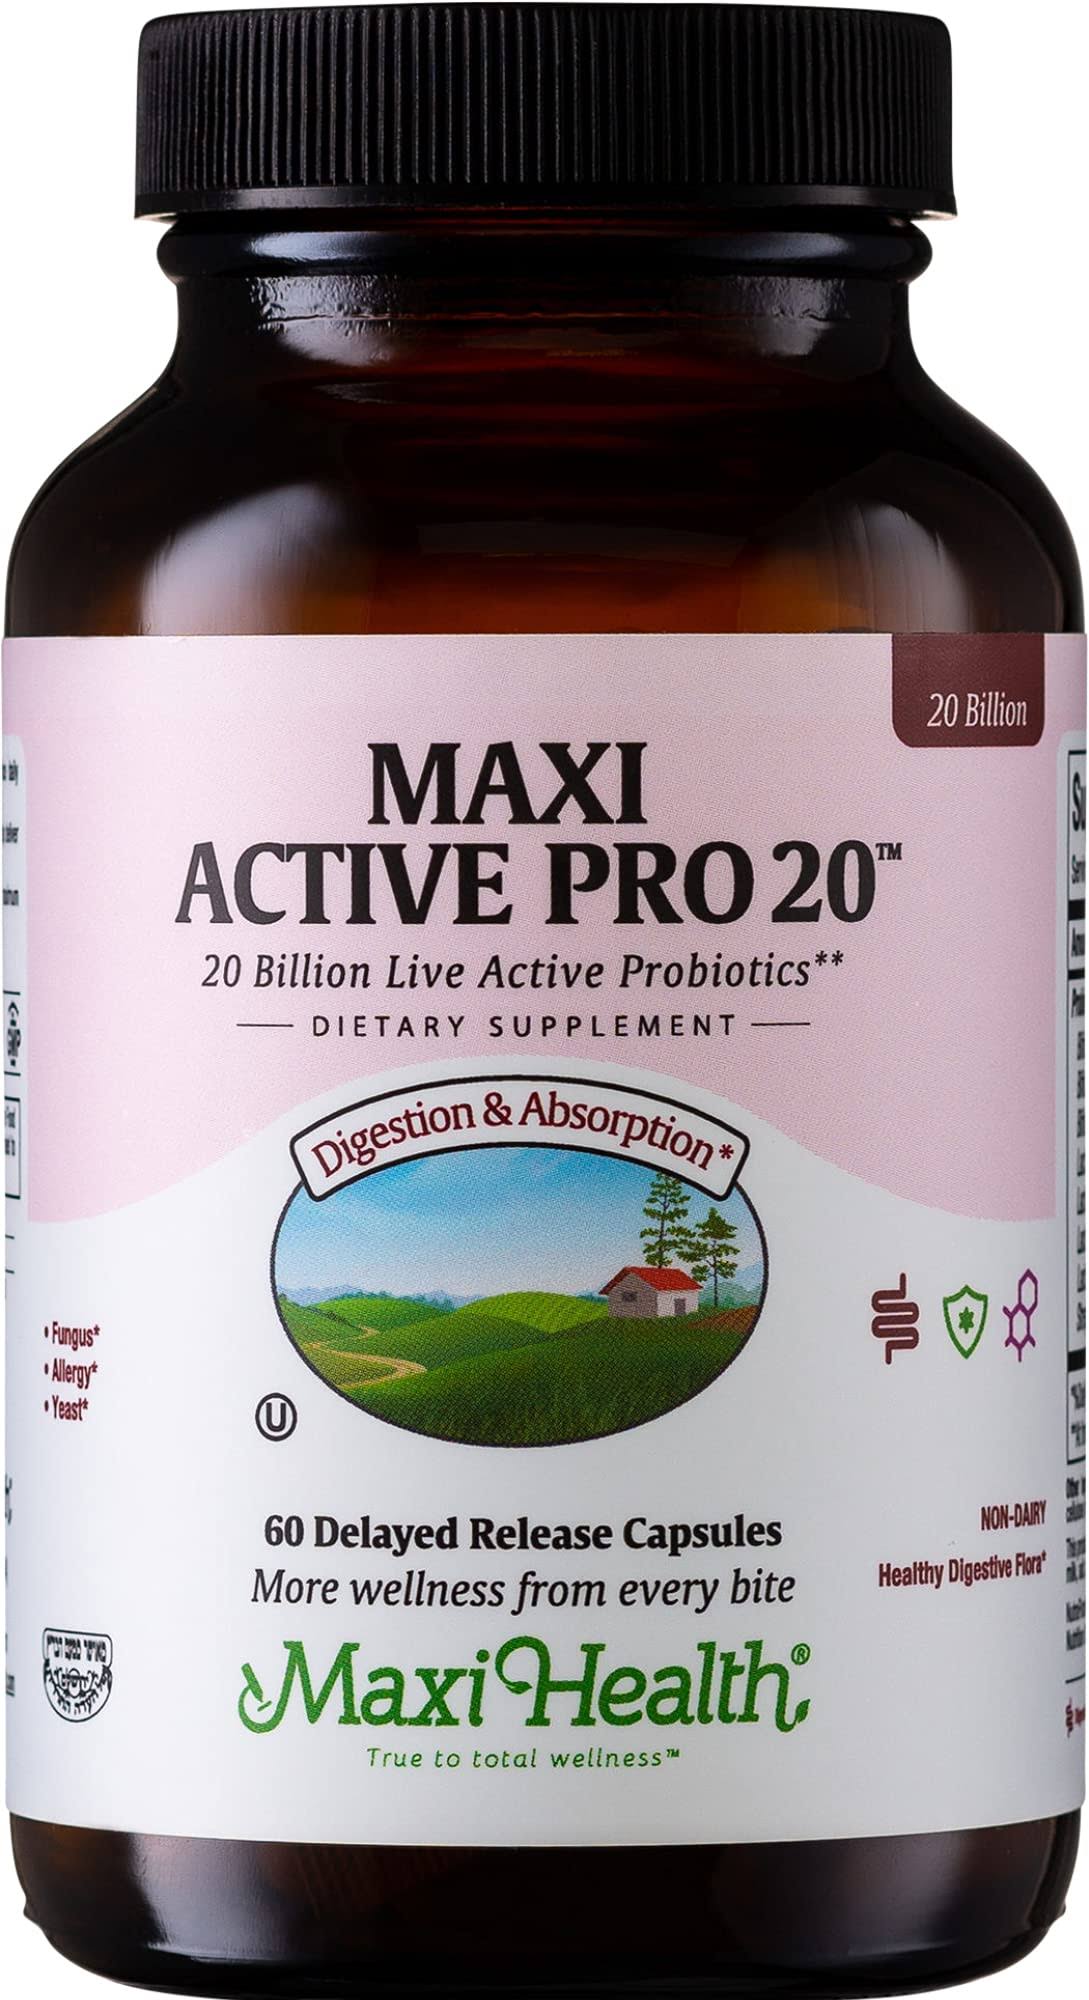 Maxi Health Active Pro-20 Intestinal Protection Probiotics Supplement Capsules - x60